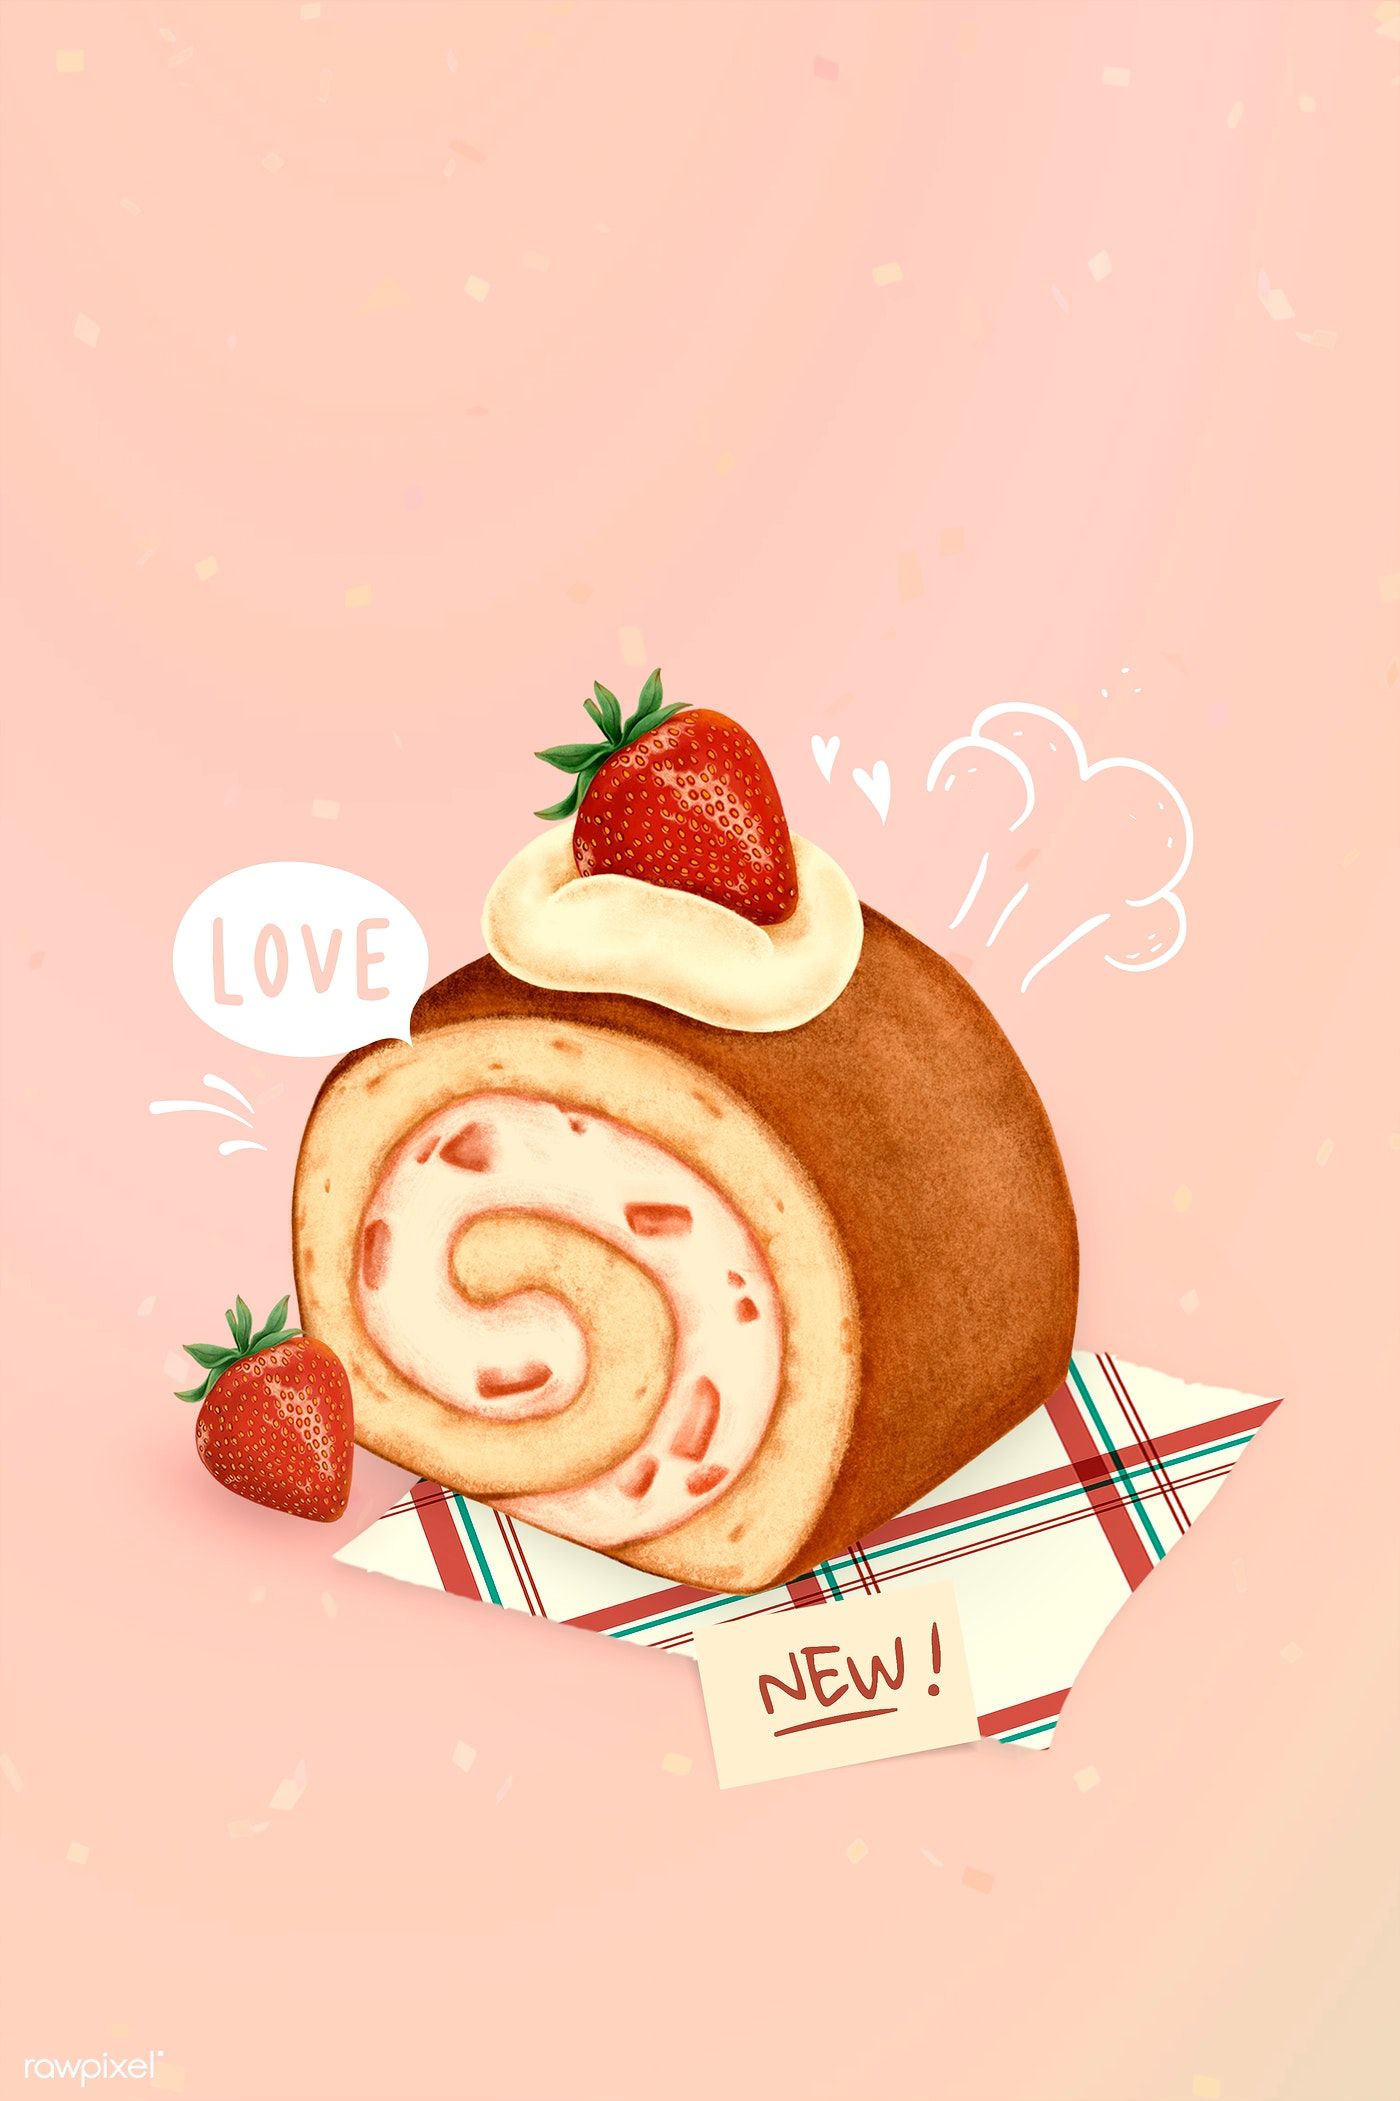 Hand drawn strawberry shortcake mockup. free image / Noon. Food illustration art, Cute food drawings, Food artwork